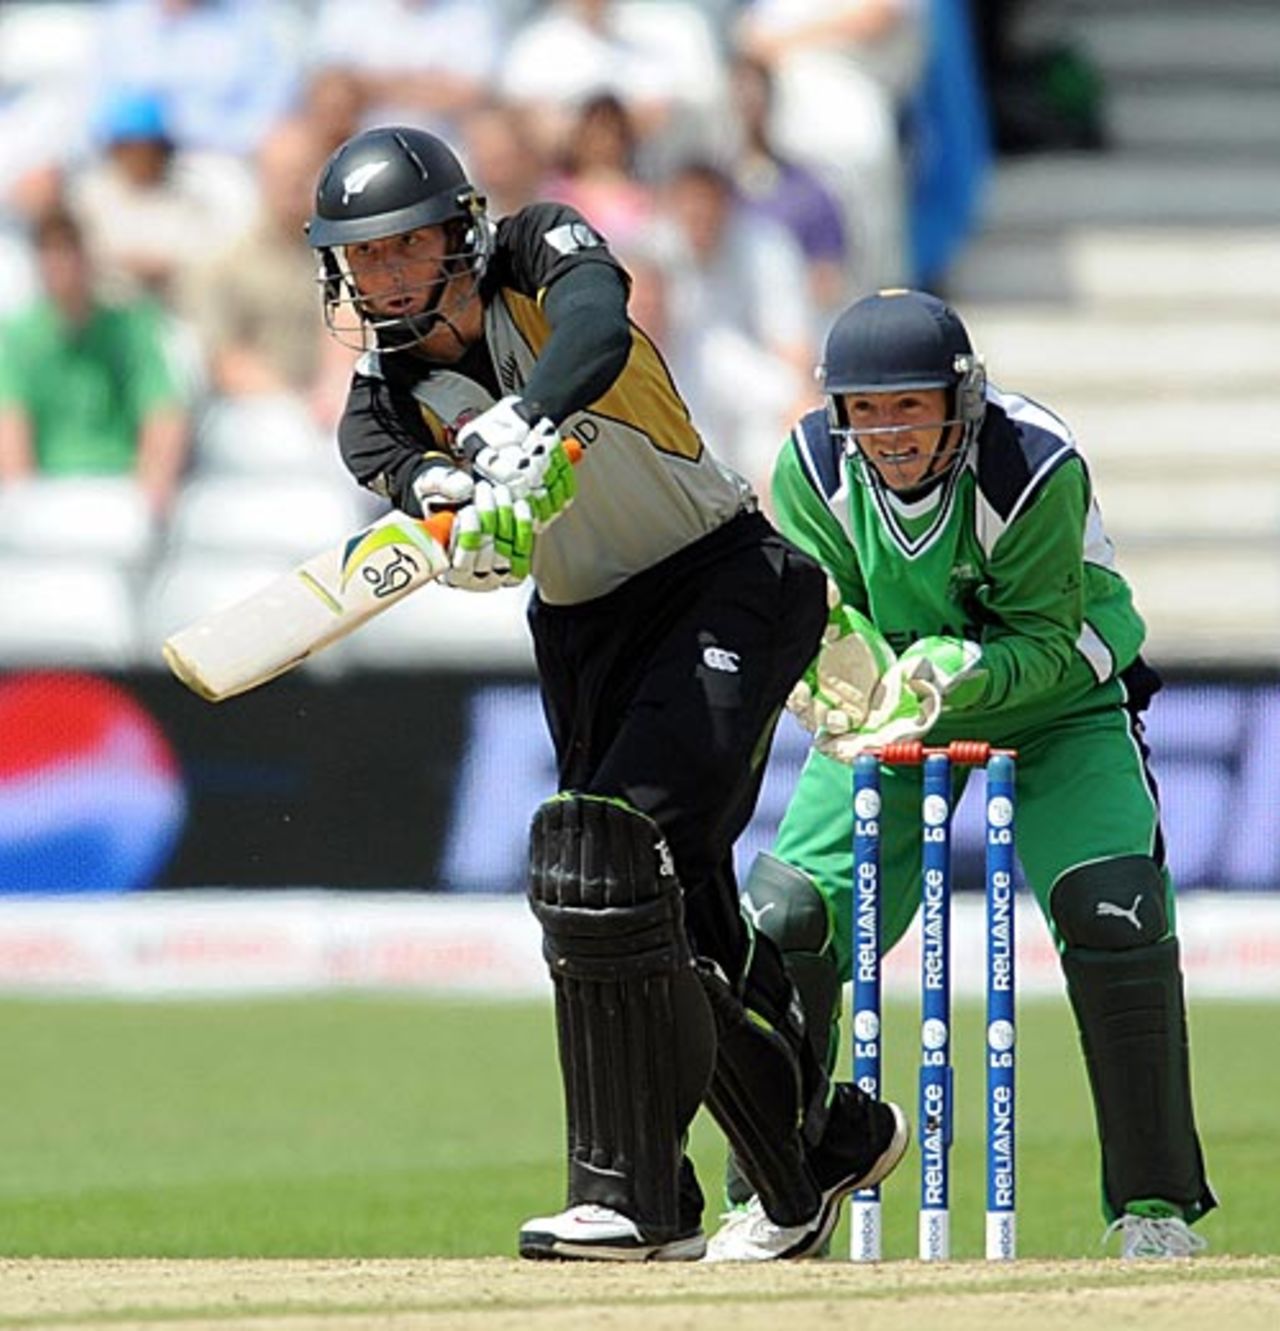 Martin Guptill pushes one back towards the bowler, Ireland v New Zealand, ICC World Twenty20 Super Eights, Trent Bridge, June 11, 2009